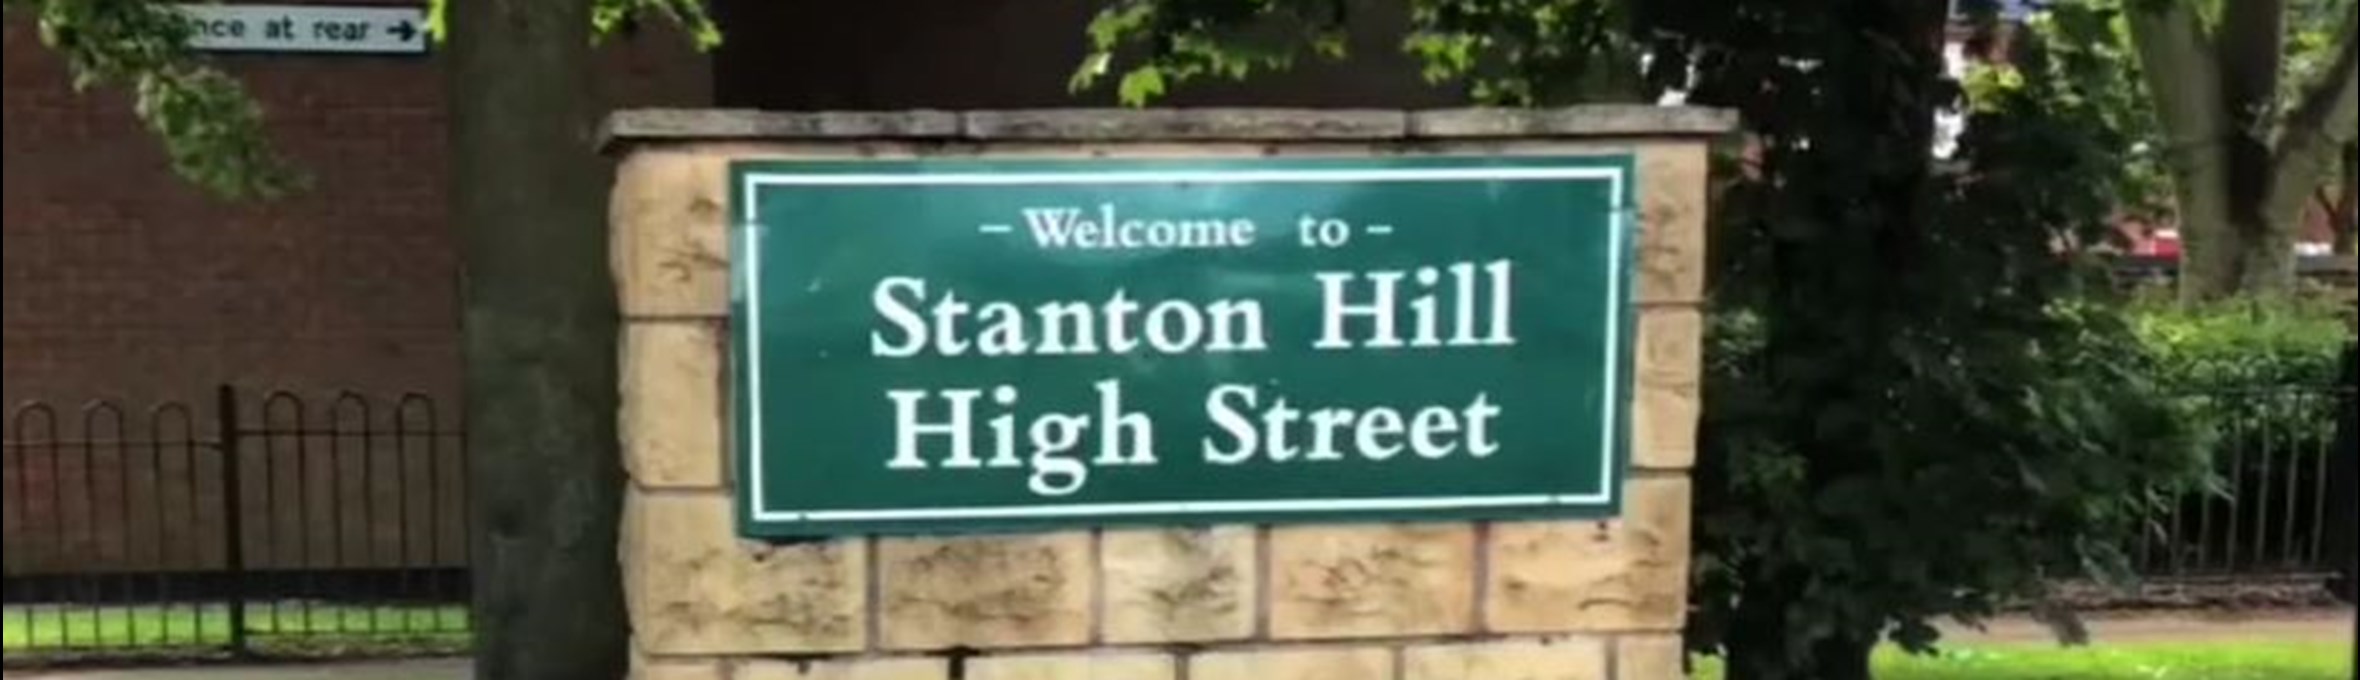 Stanton Hill High Street